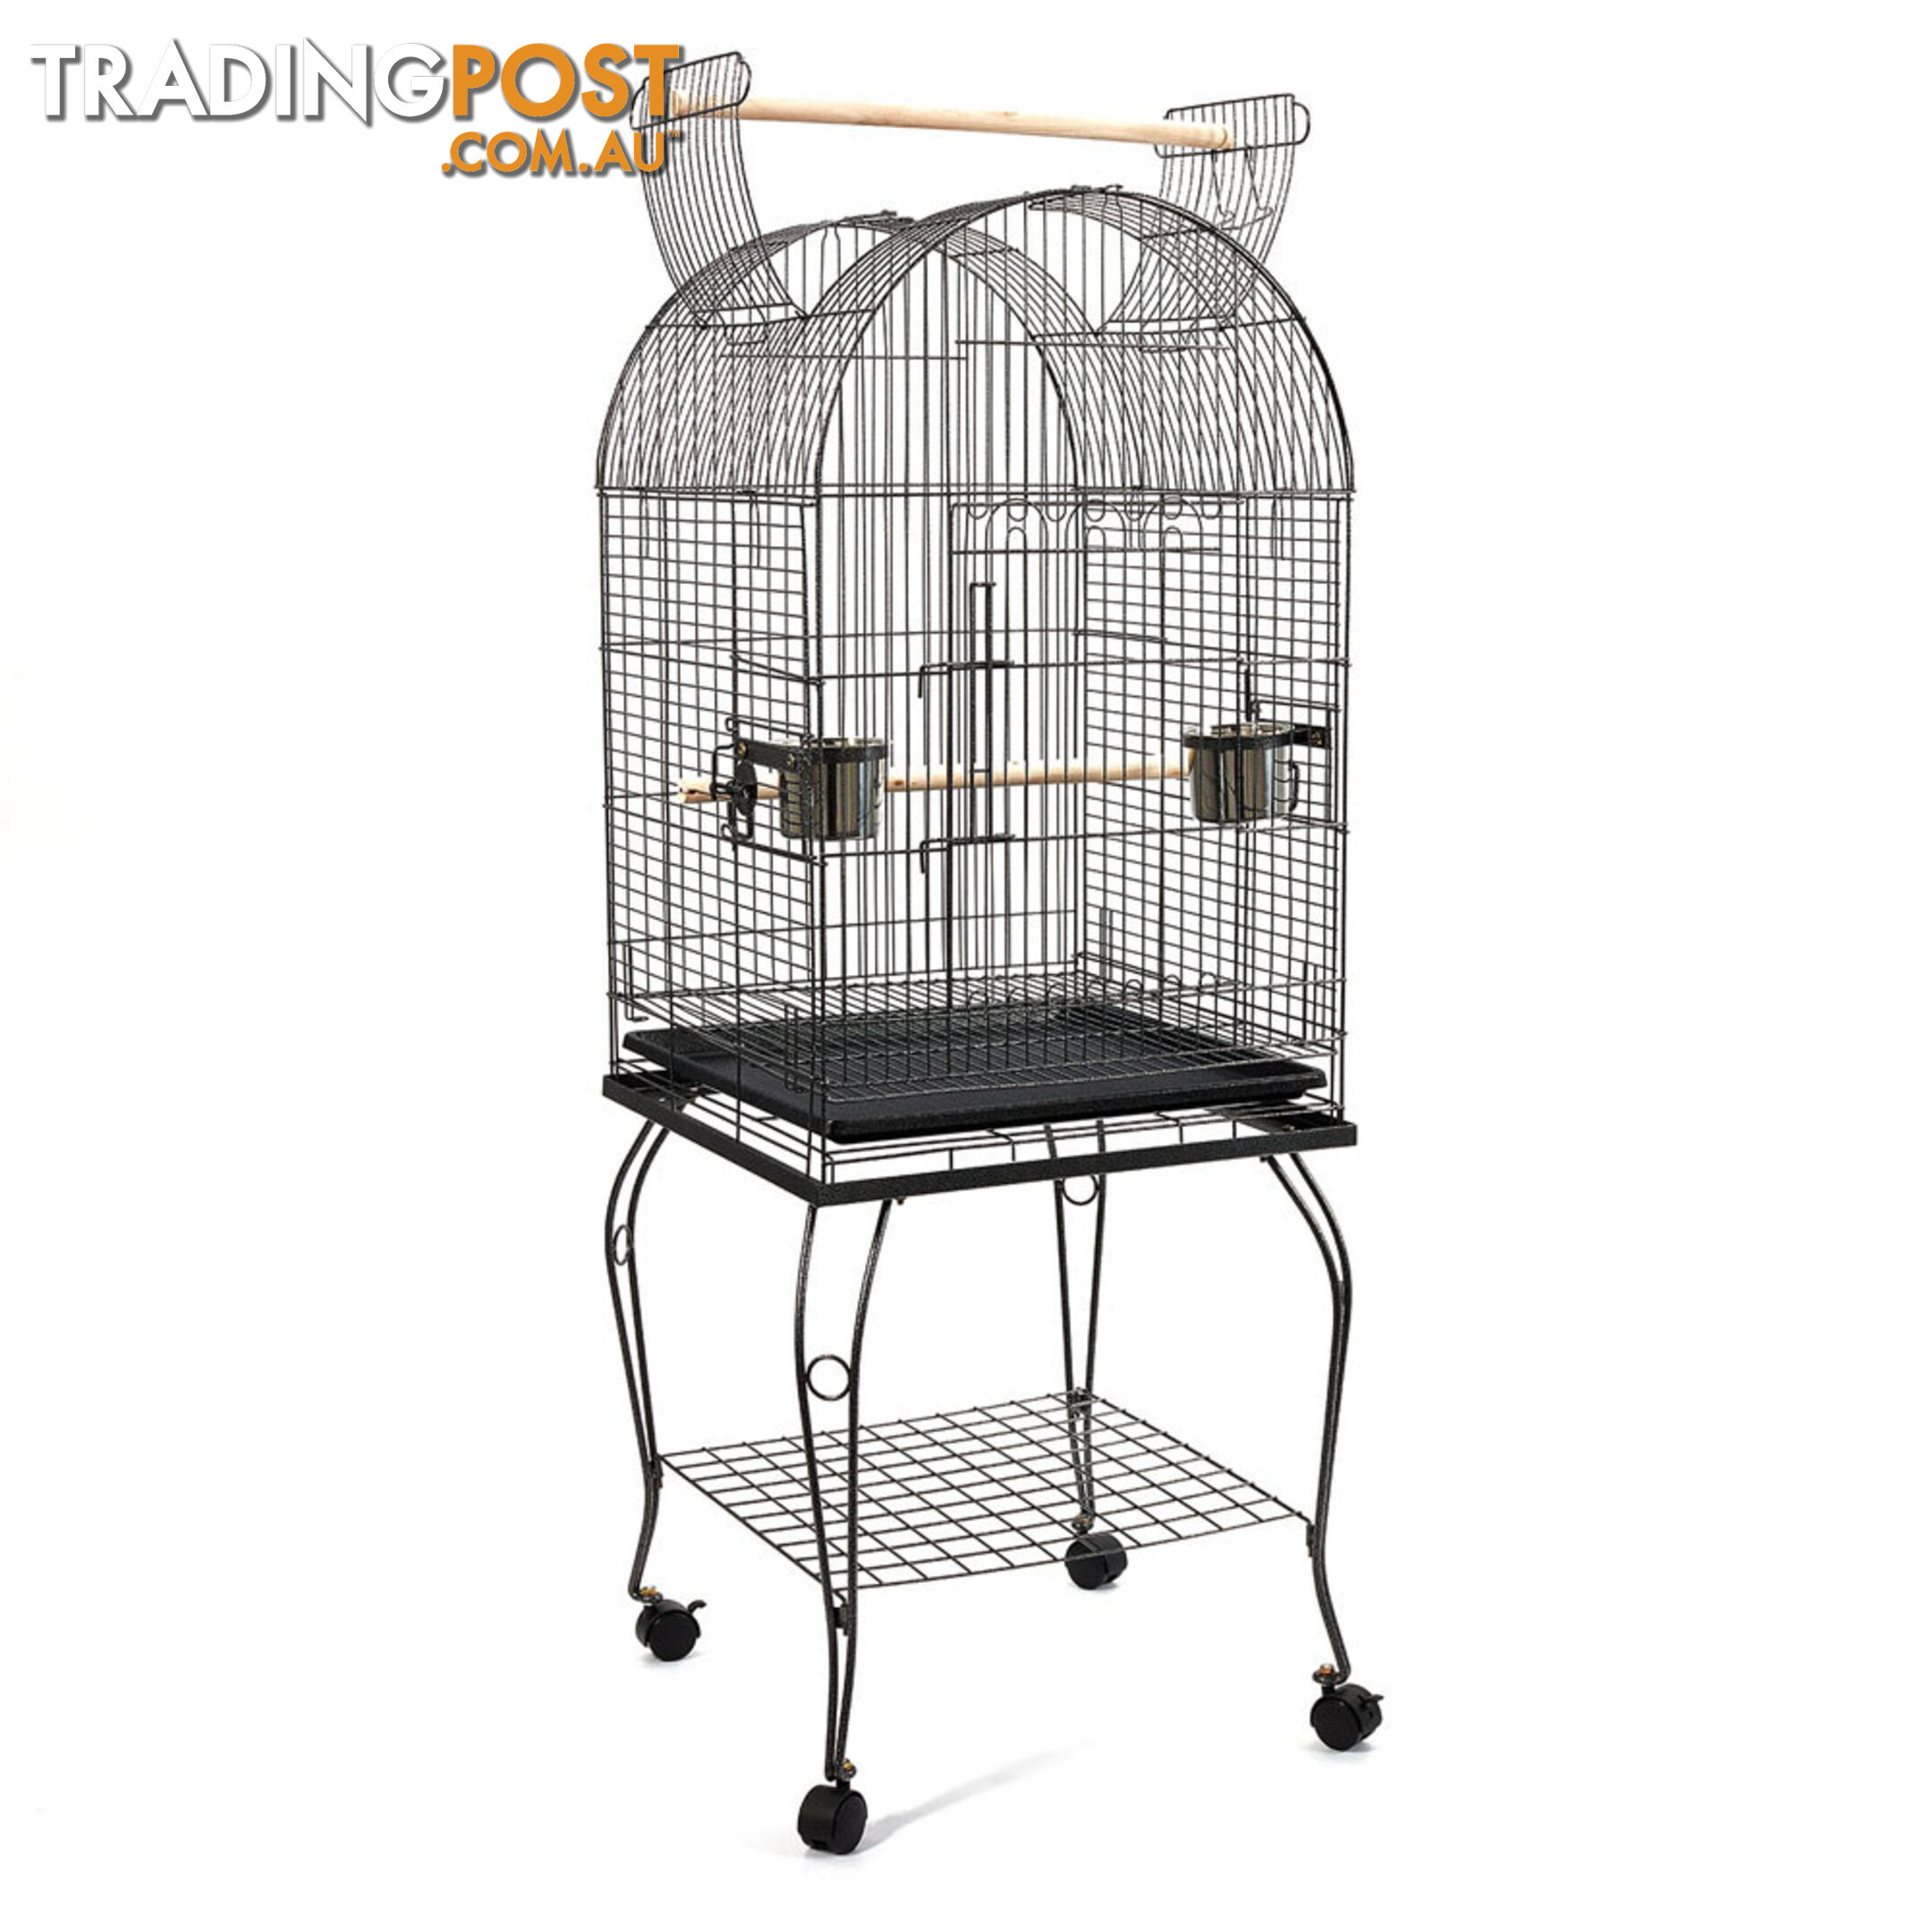 Parrot Pet Aviary Bird Cage w/ Open Roof 150cm Black